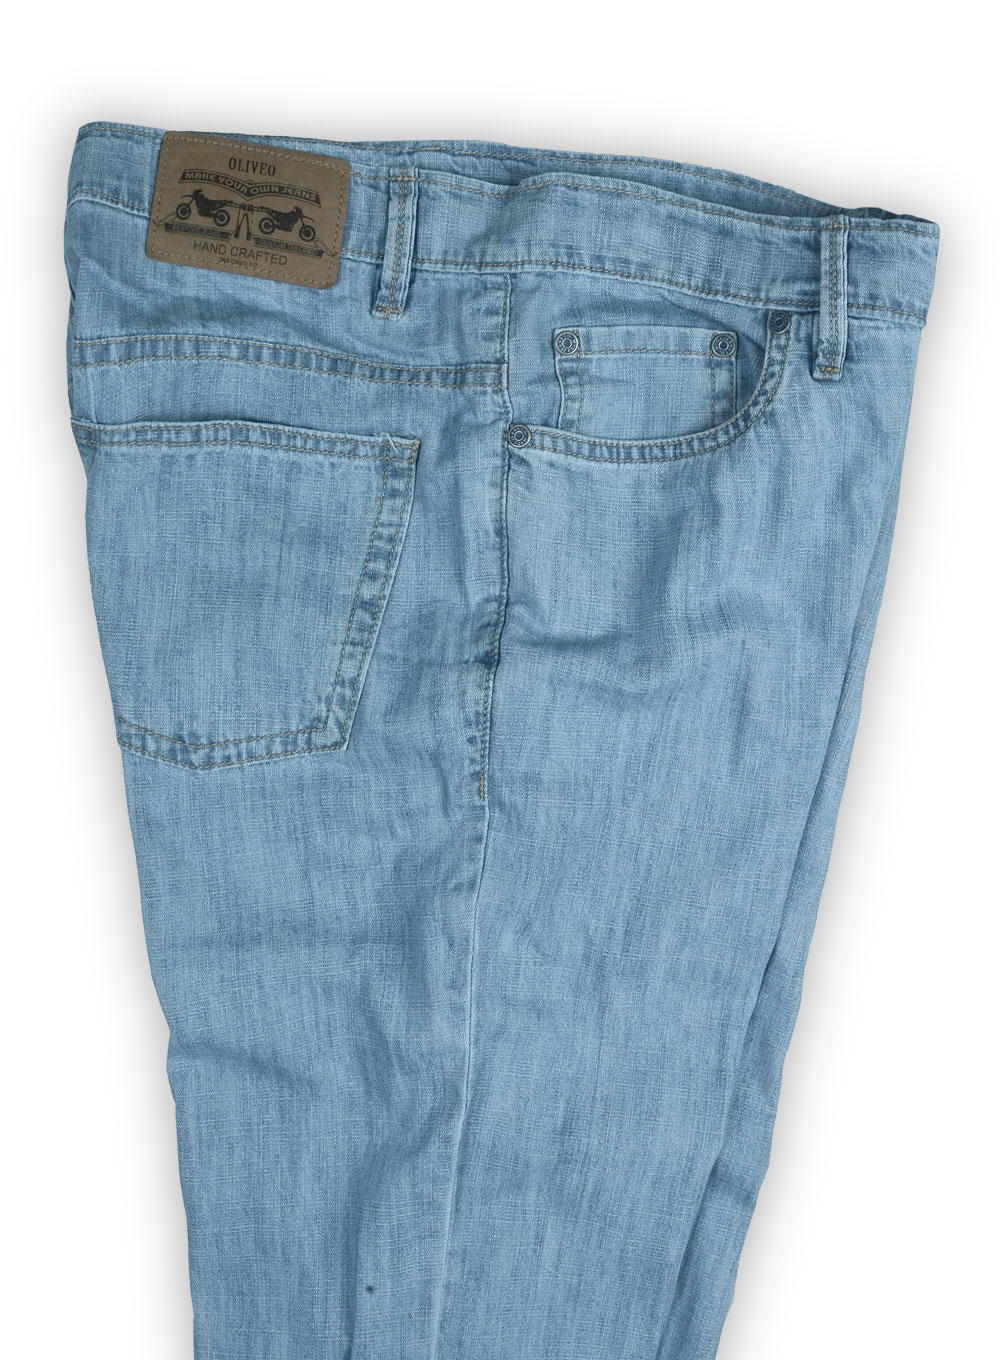 6oz Feather Light Weight Jeans - Light Blue